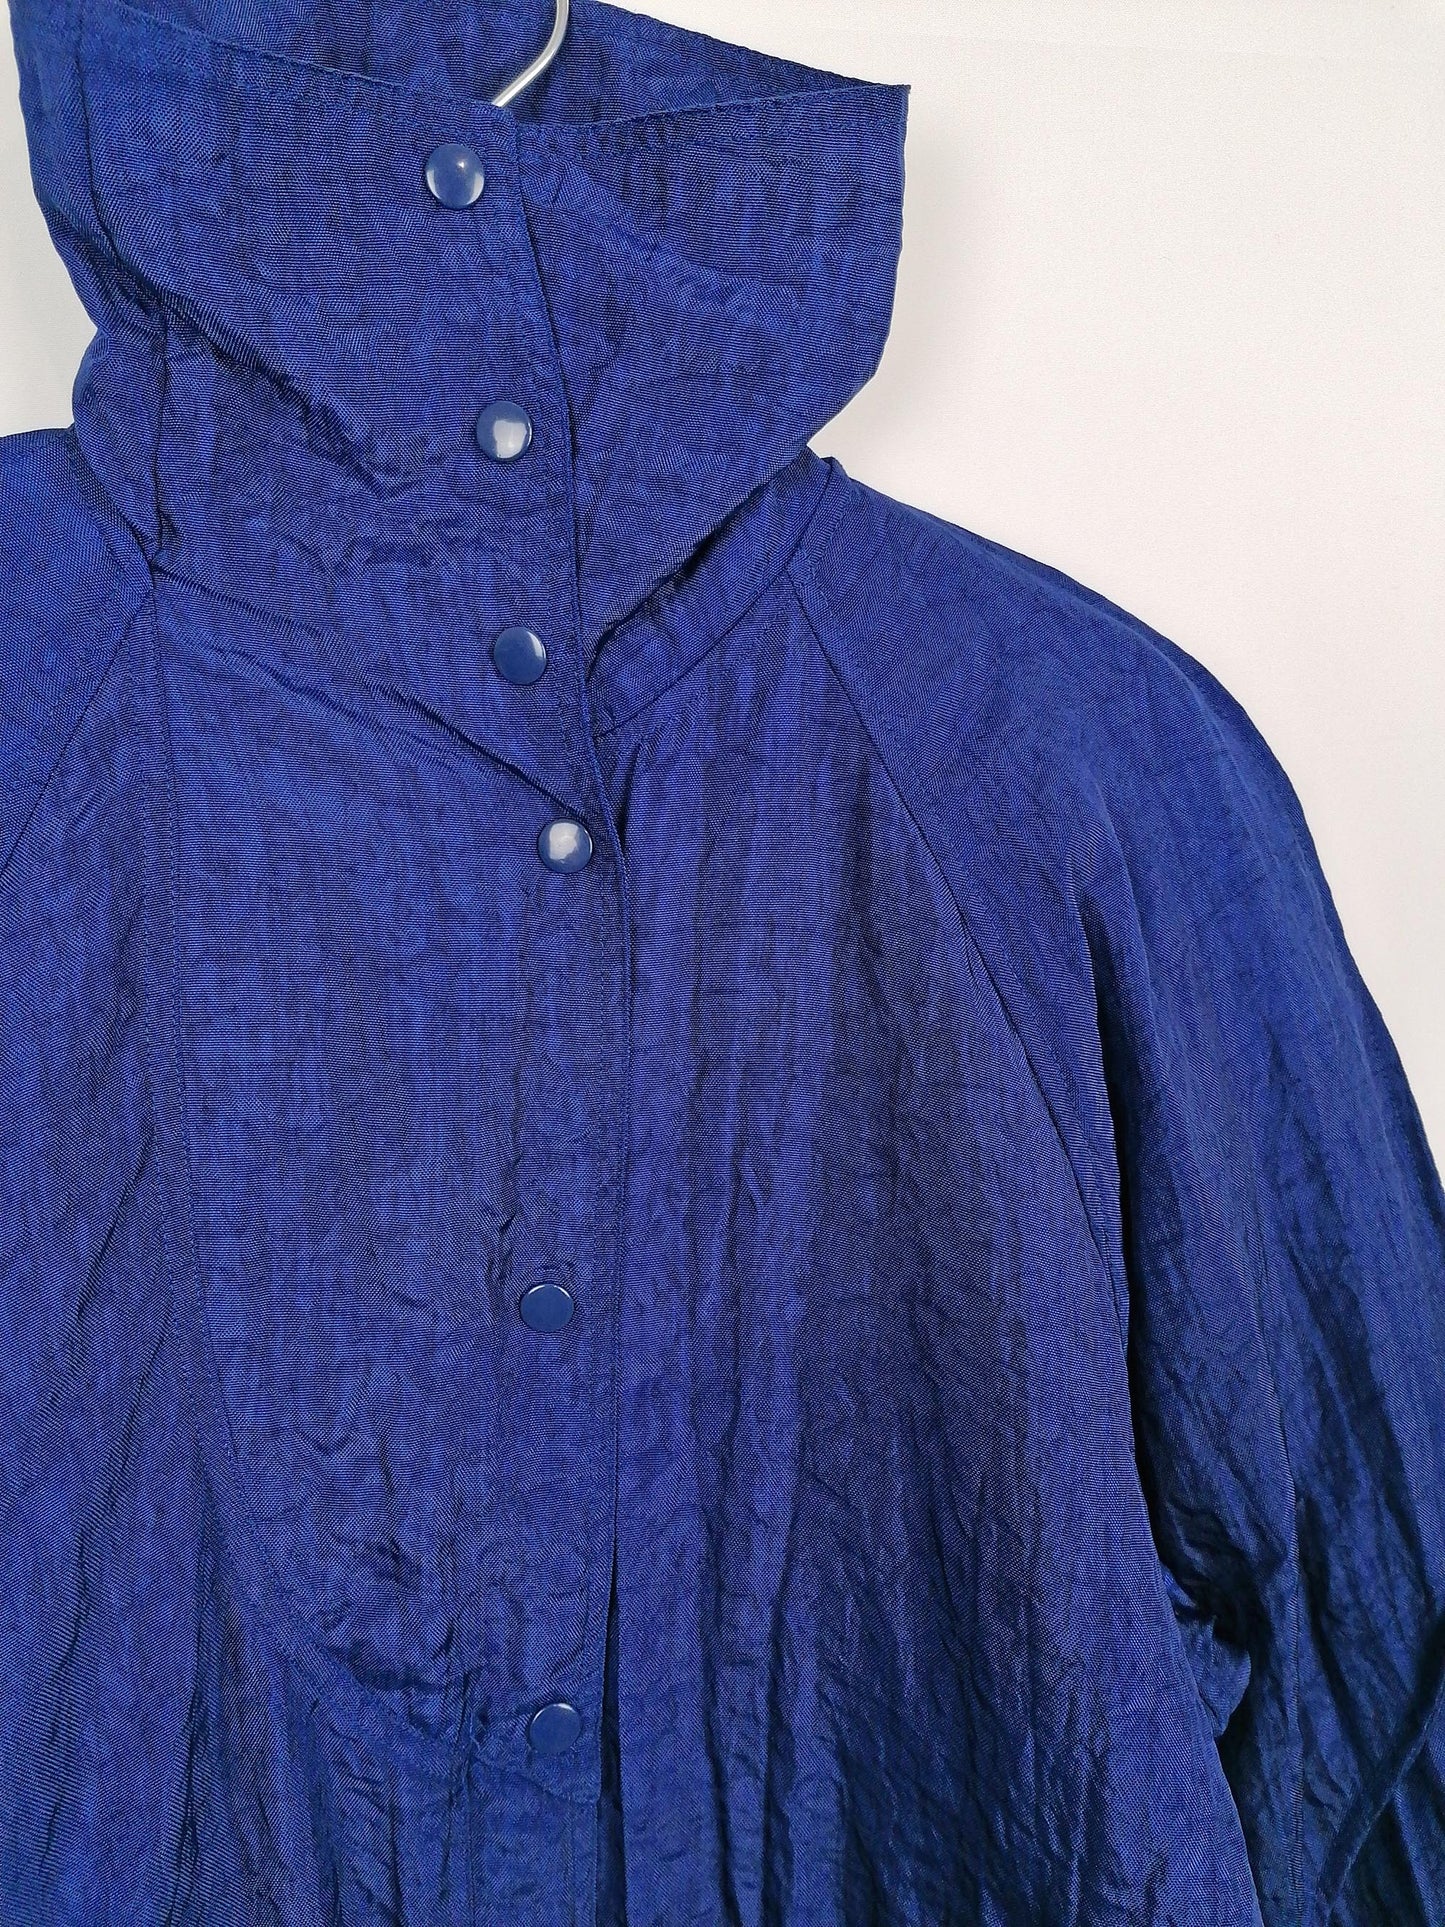 80's Oversized Puffy Jacket Electric Blue - size M